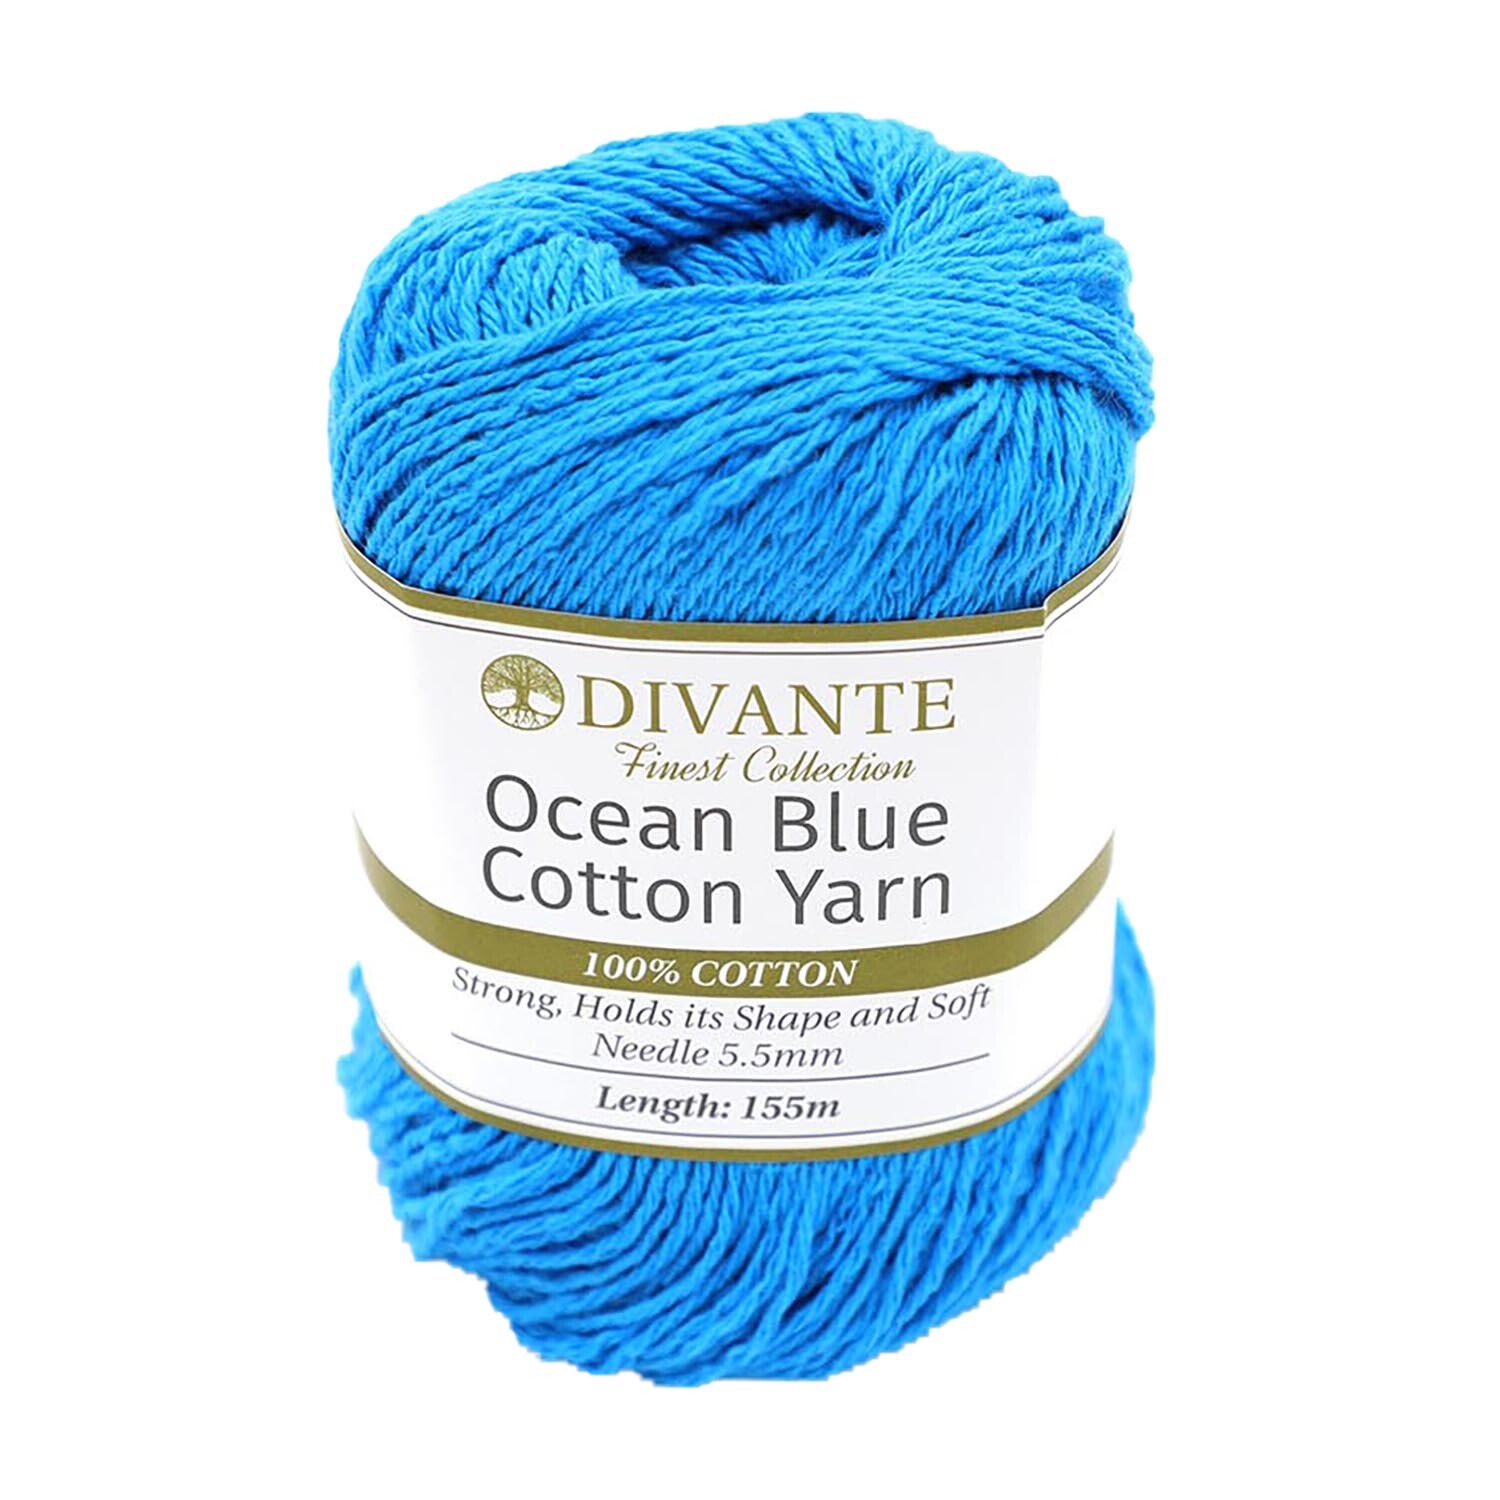 Divante Ocean Blue Cotton Yarn 155m Image